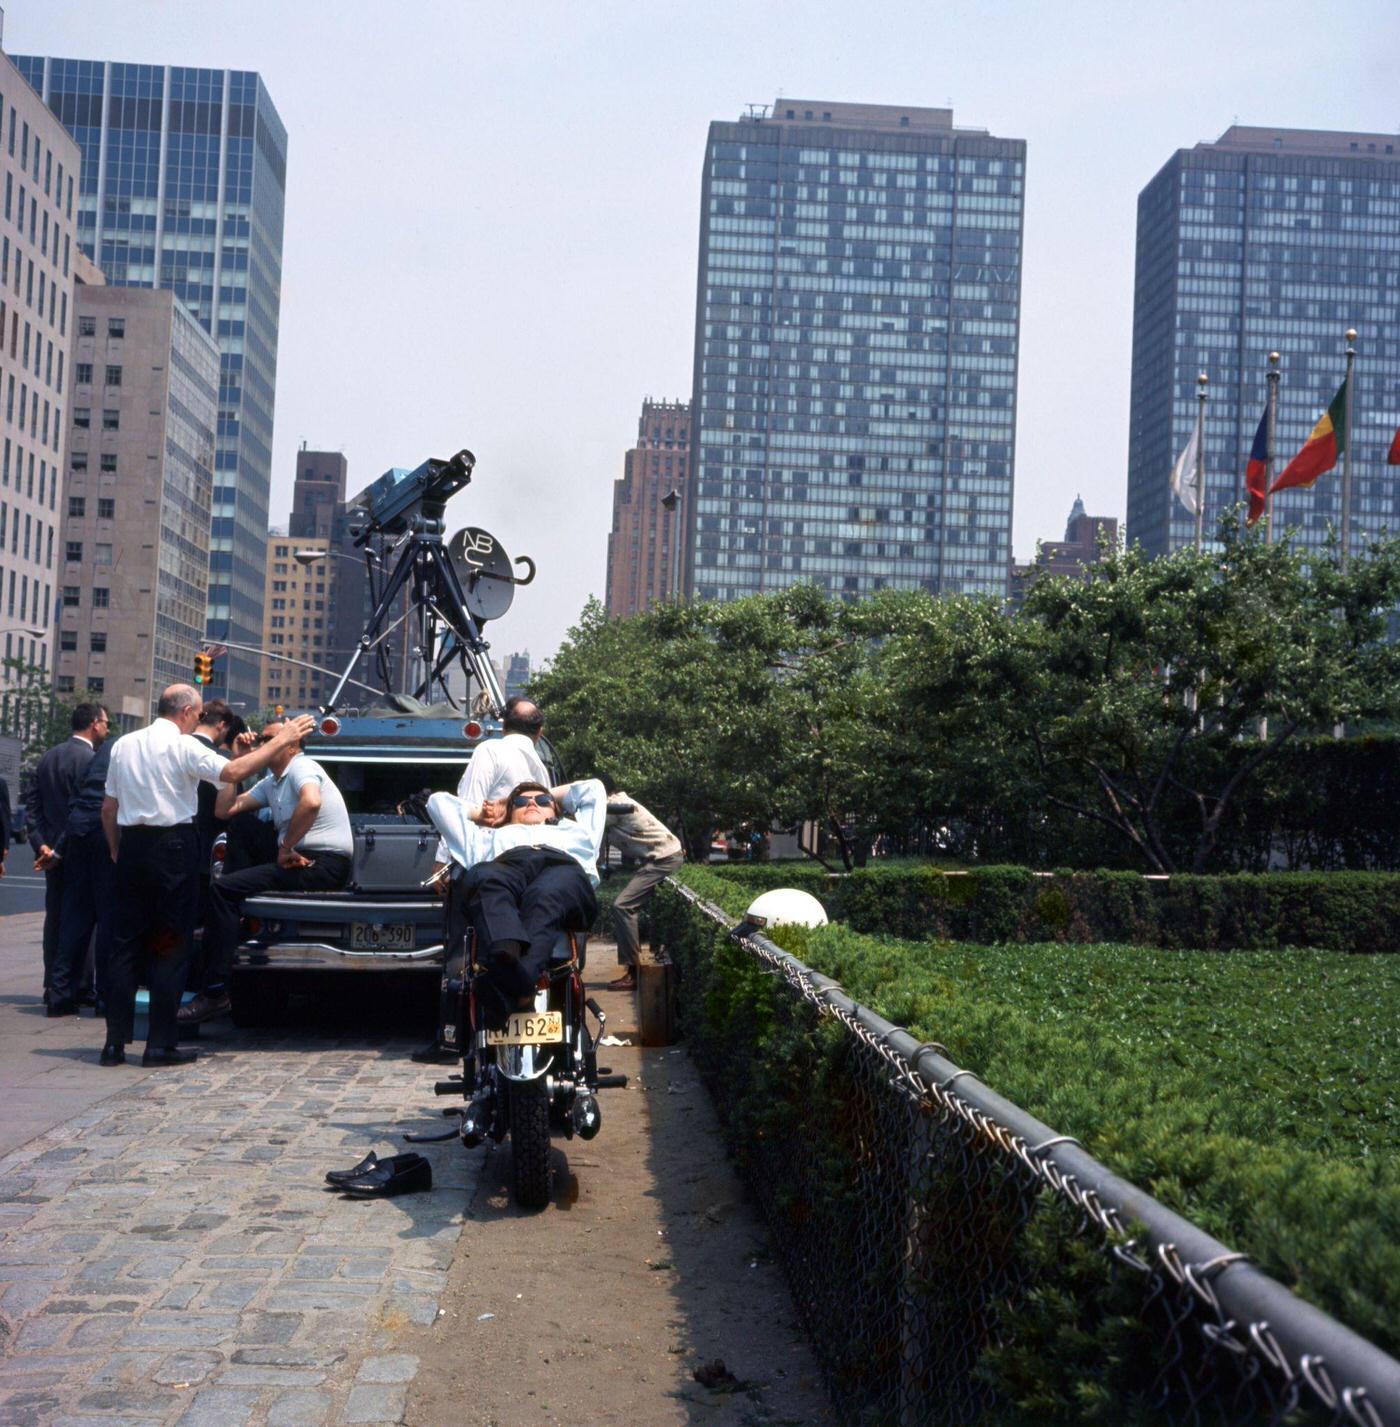 Nbc Television Crew Takes A Break Near The United Nations, Manhattan, 1967